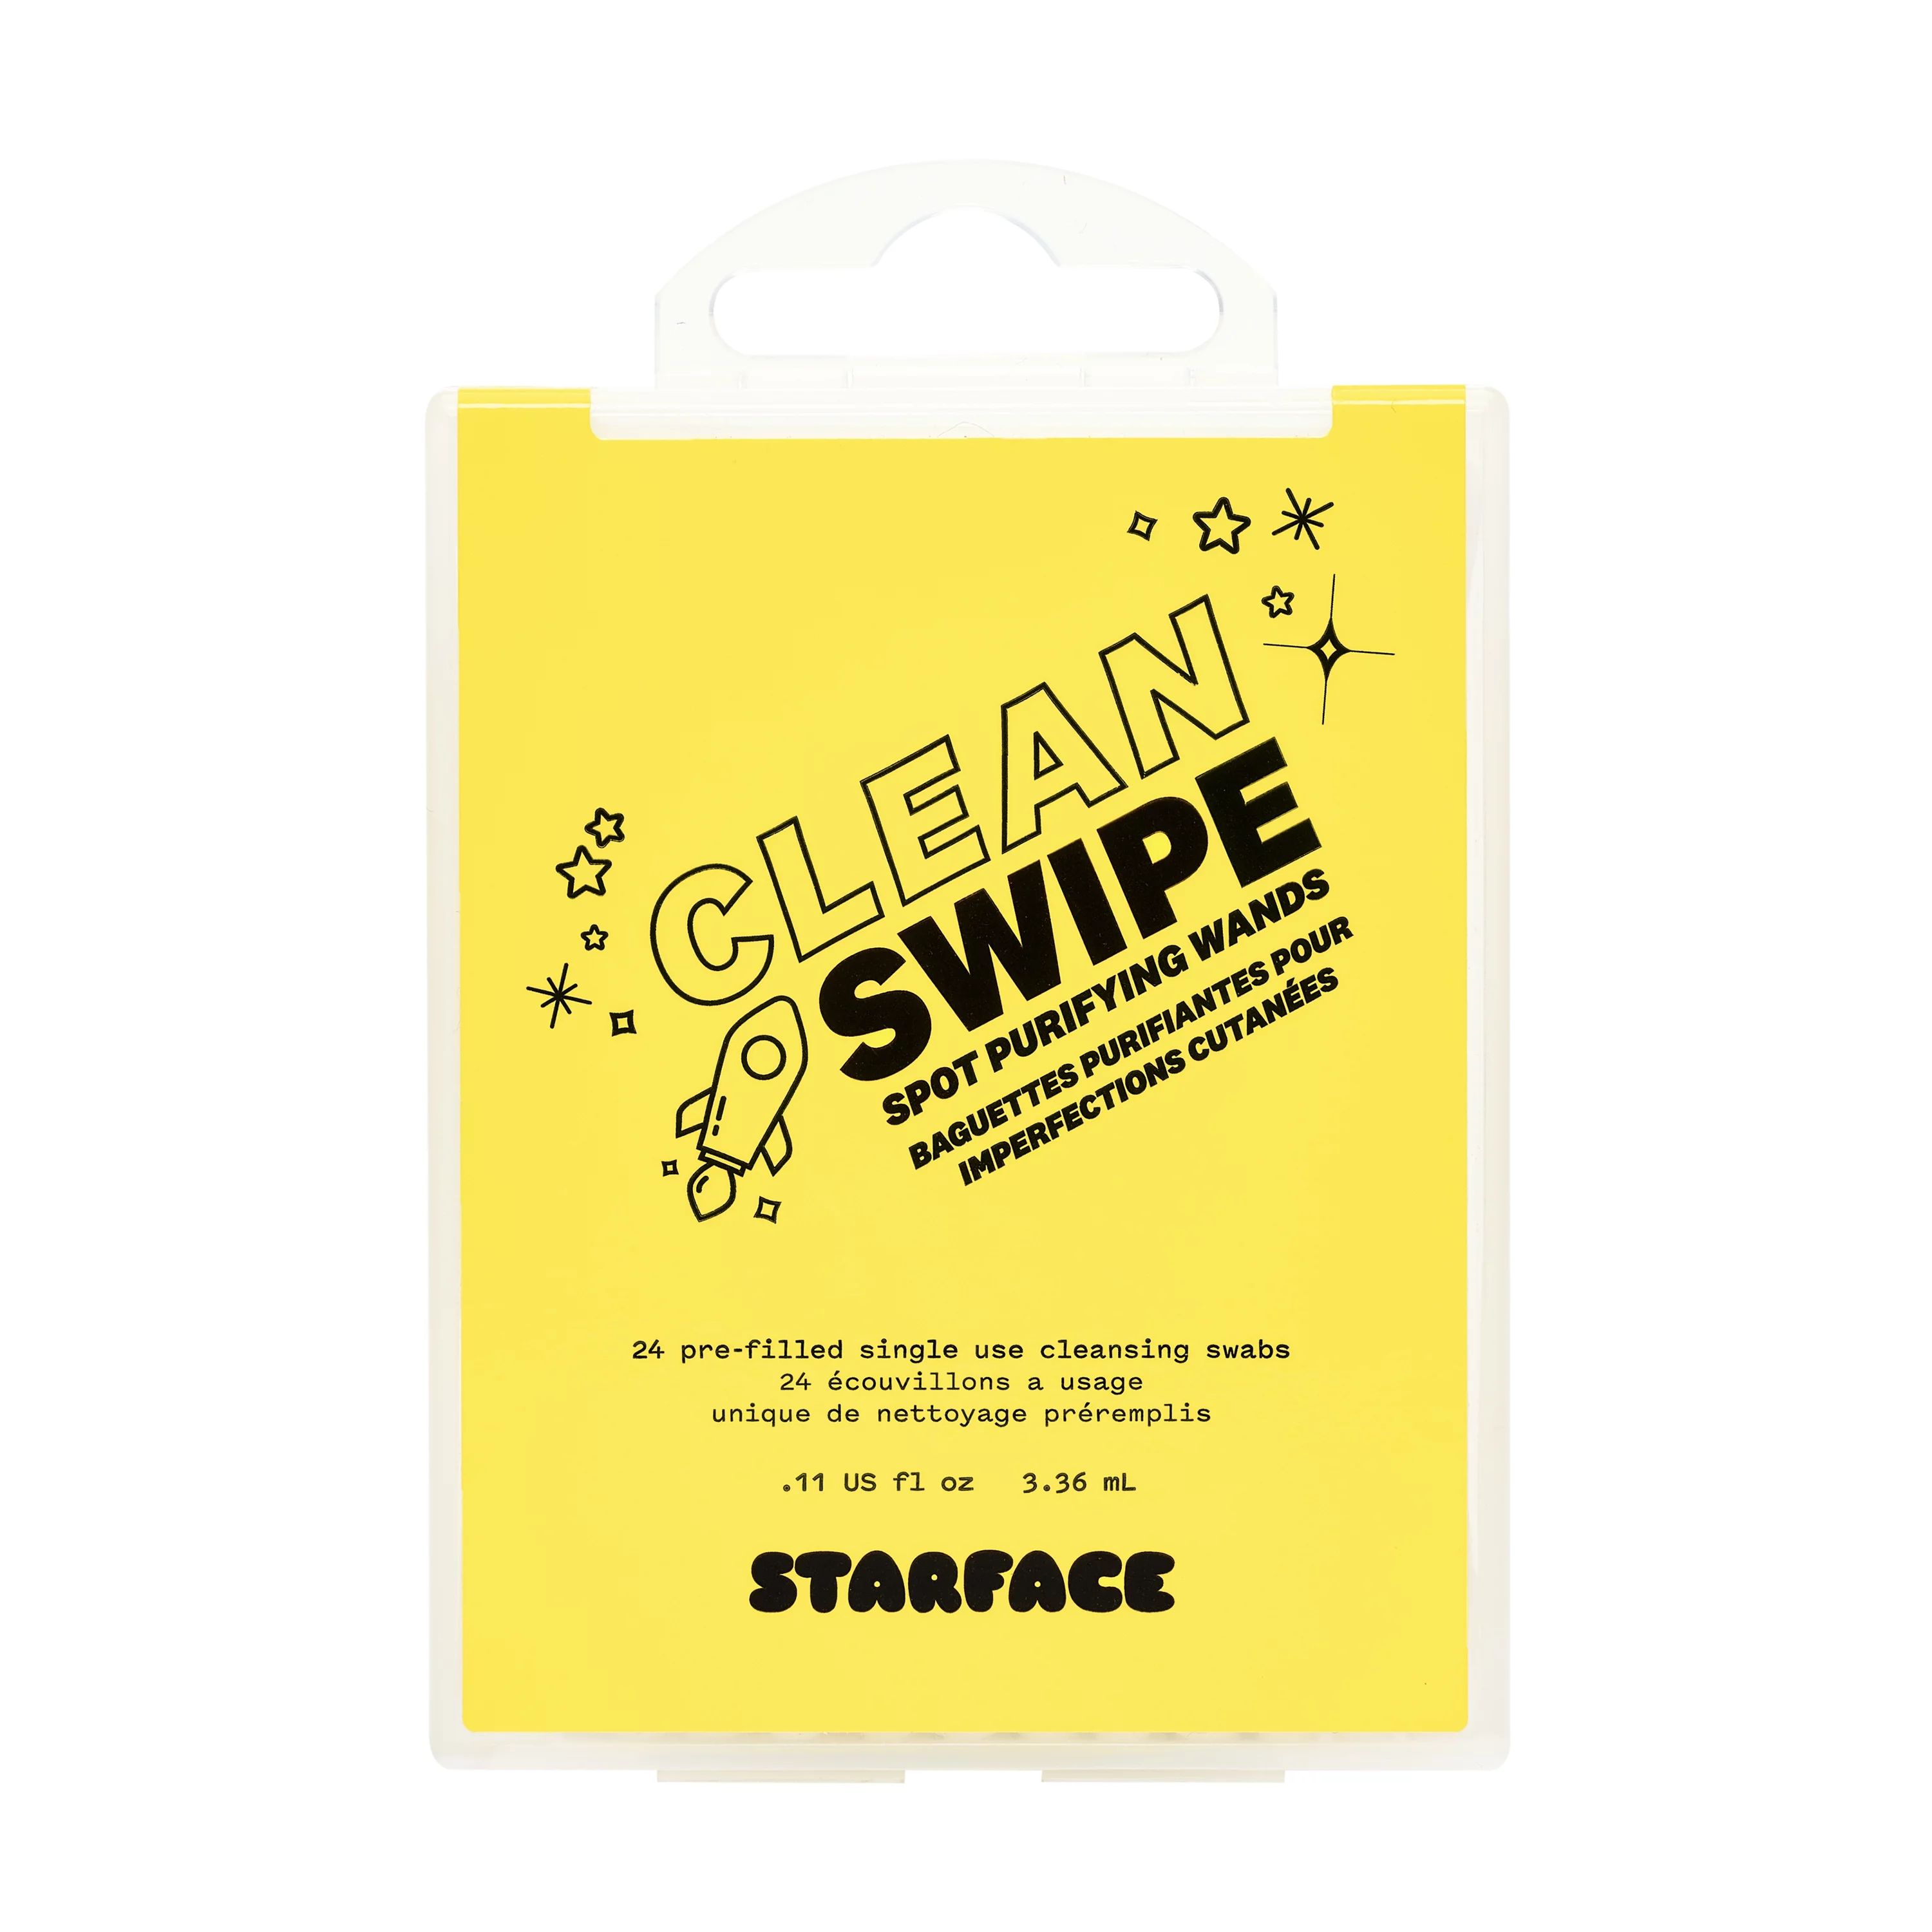 Starface Clean Swipe Spot Purifying Wands 24ct - Walmart.com | Walmart (US)